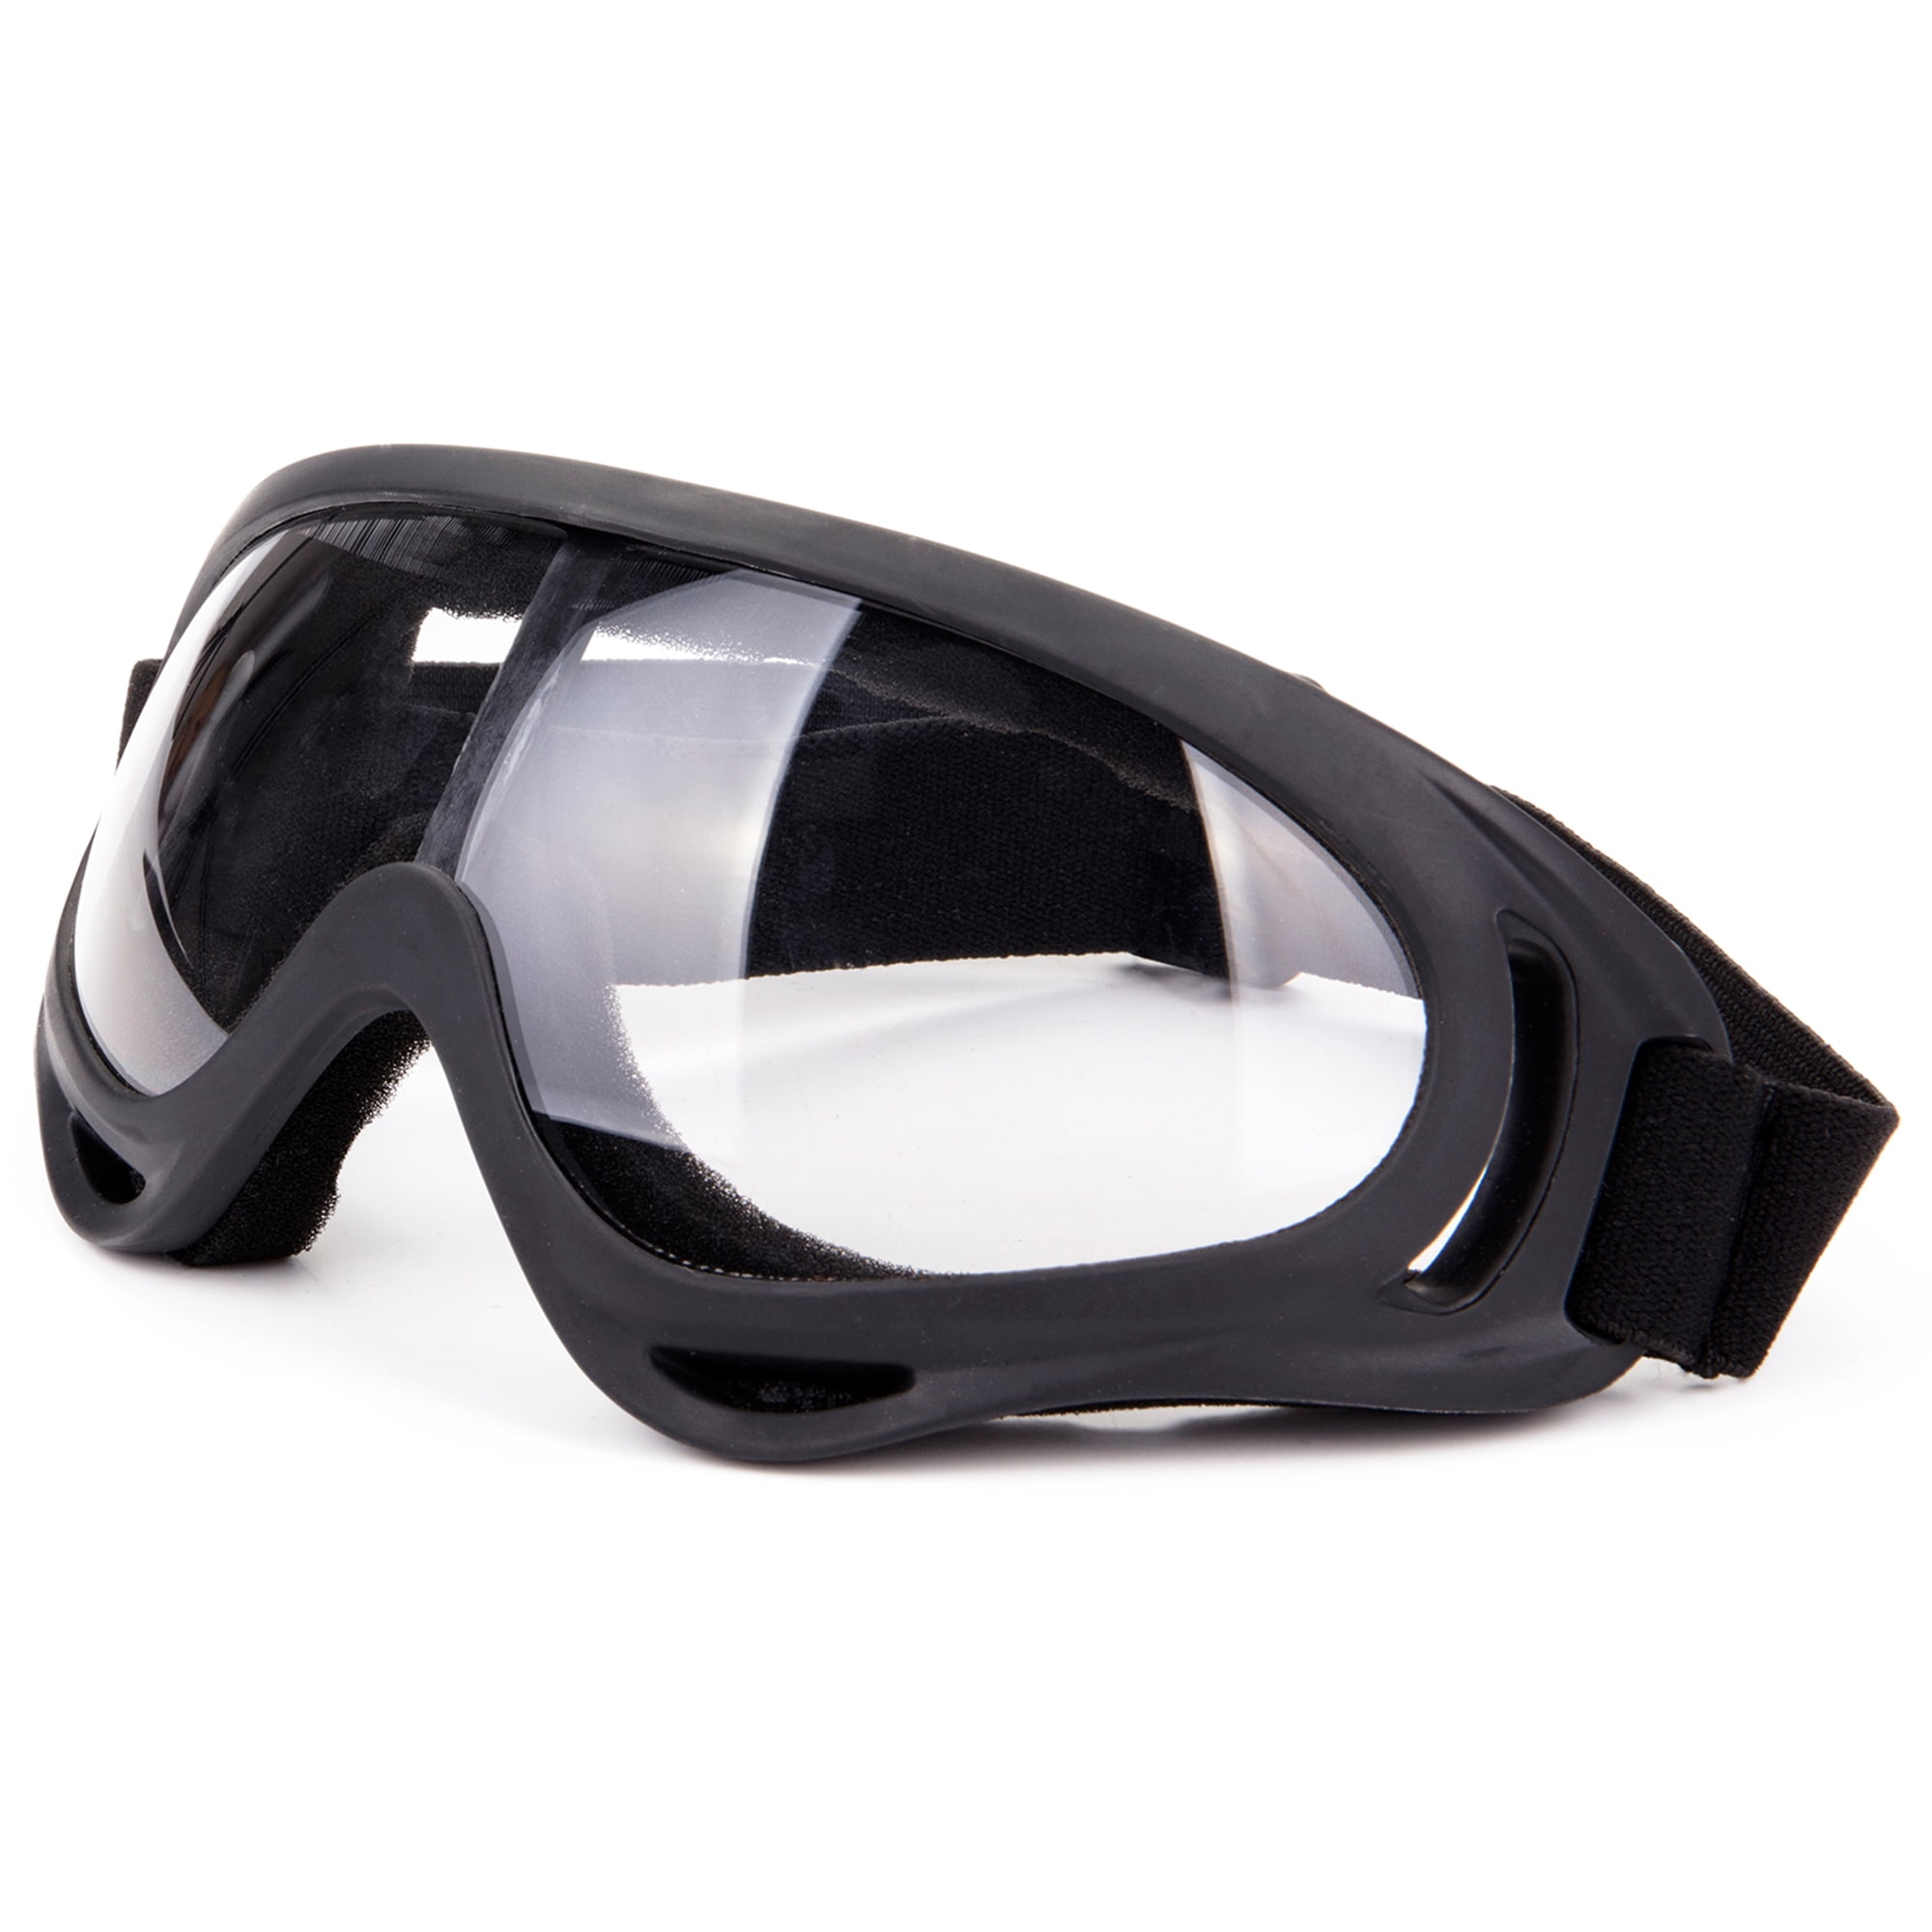 Outdoor sports goggles Ski/Mountain bike/Motorcycle/Snow-board/Winter UV glasses 